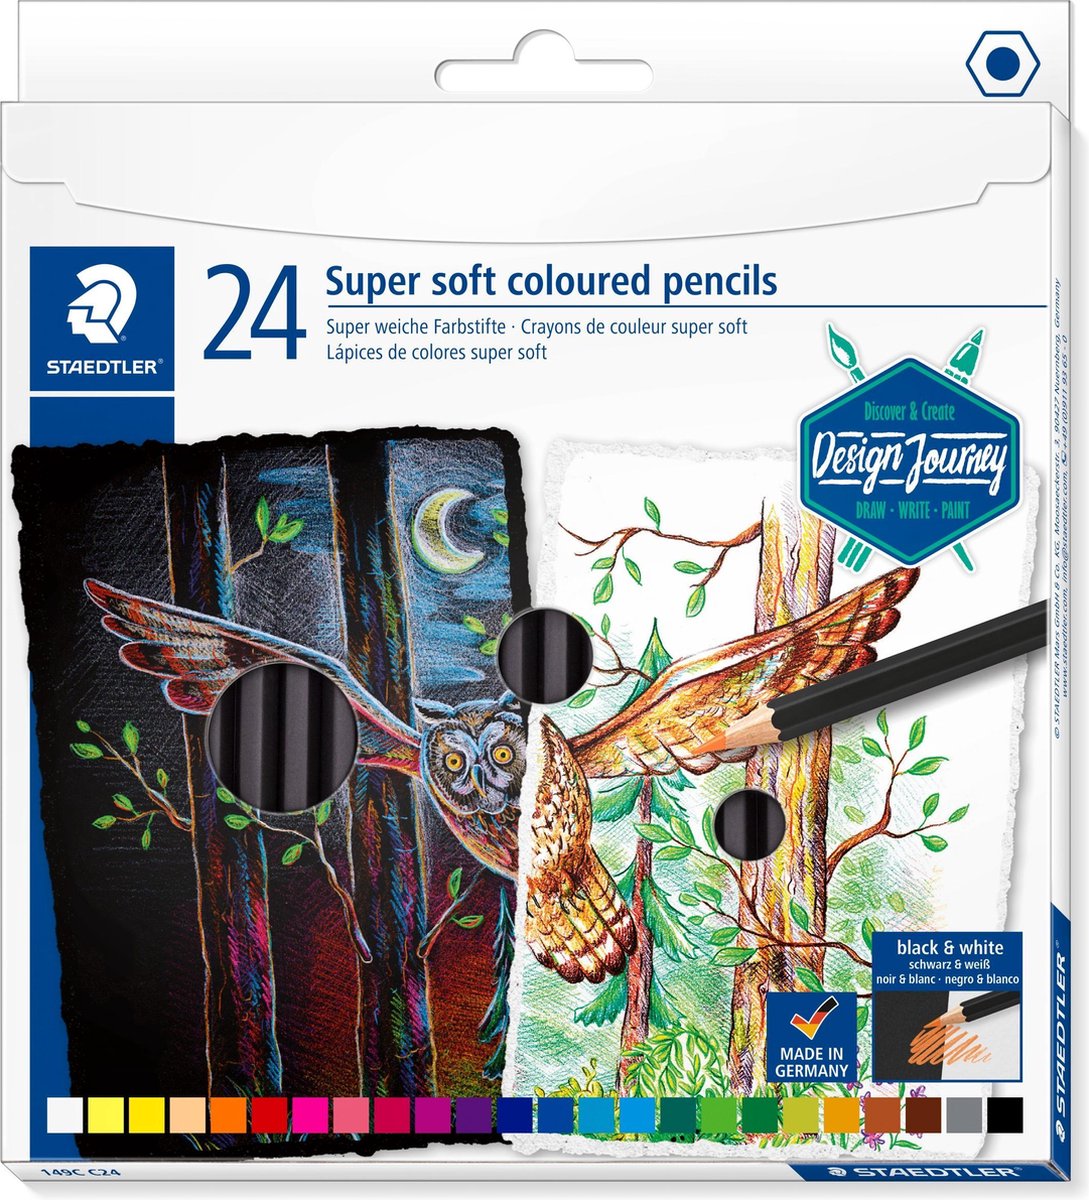 STAEDTLER Design Journey - super soft kleurpotlood - set 24 st